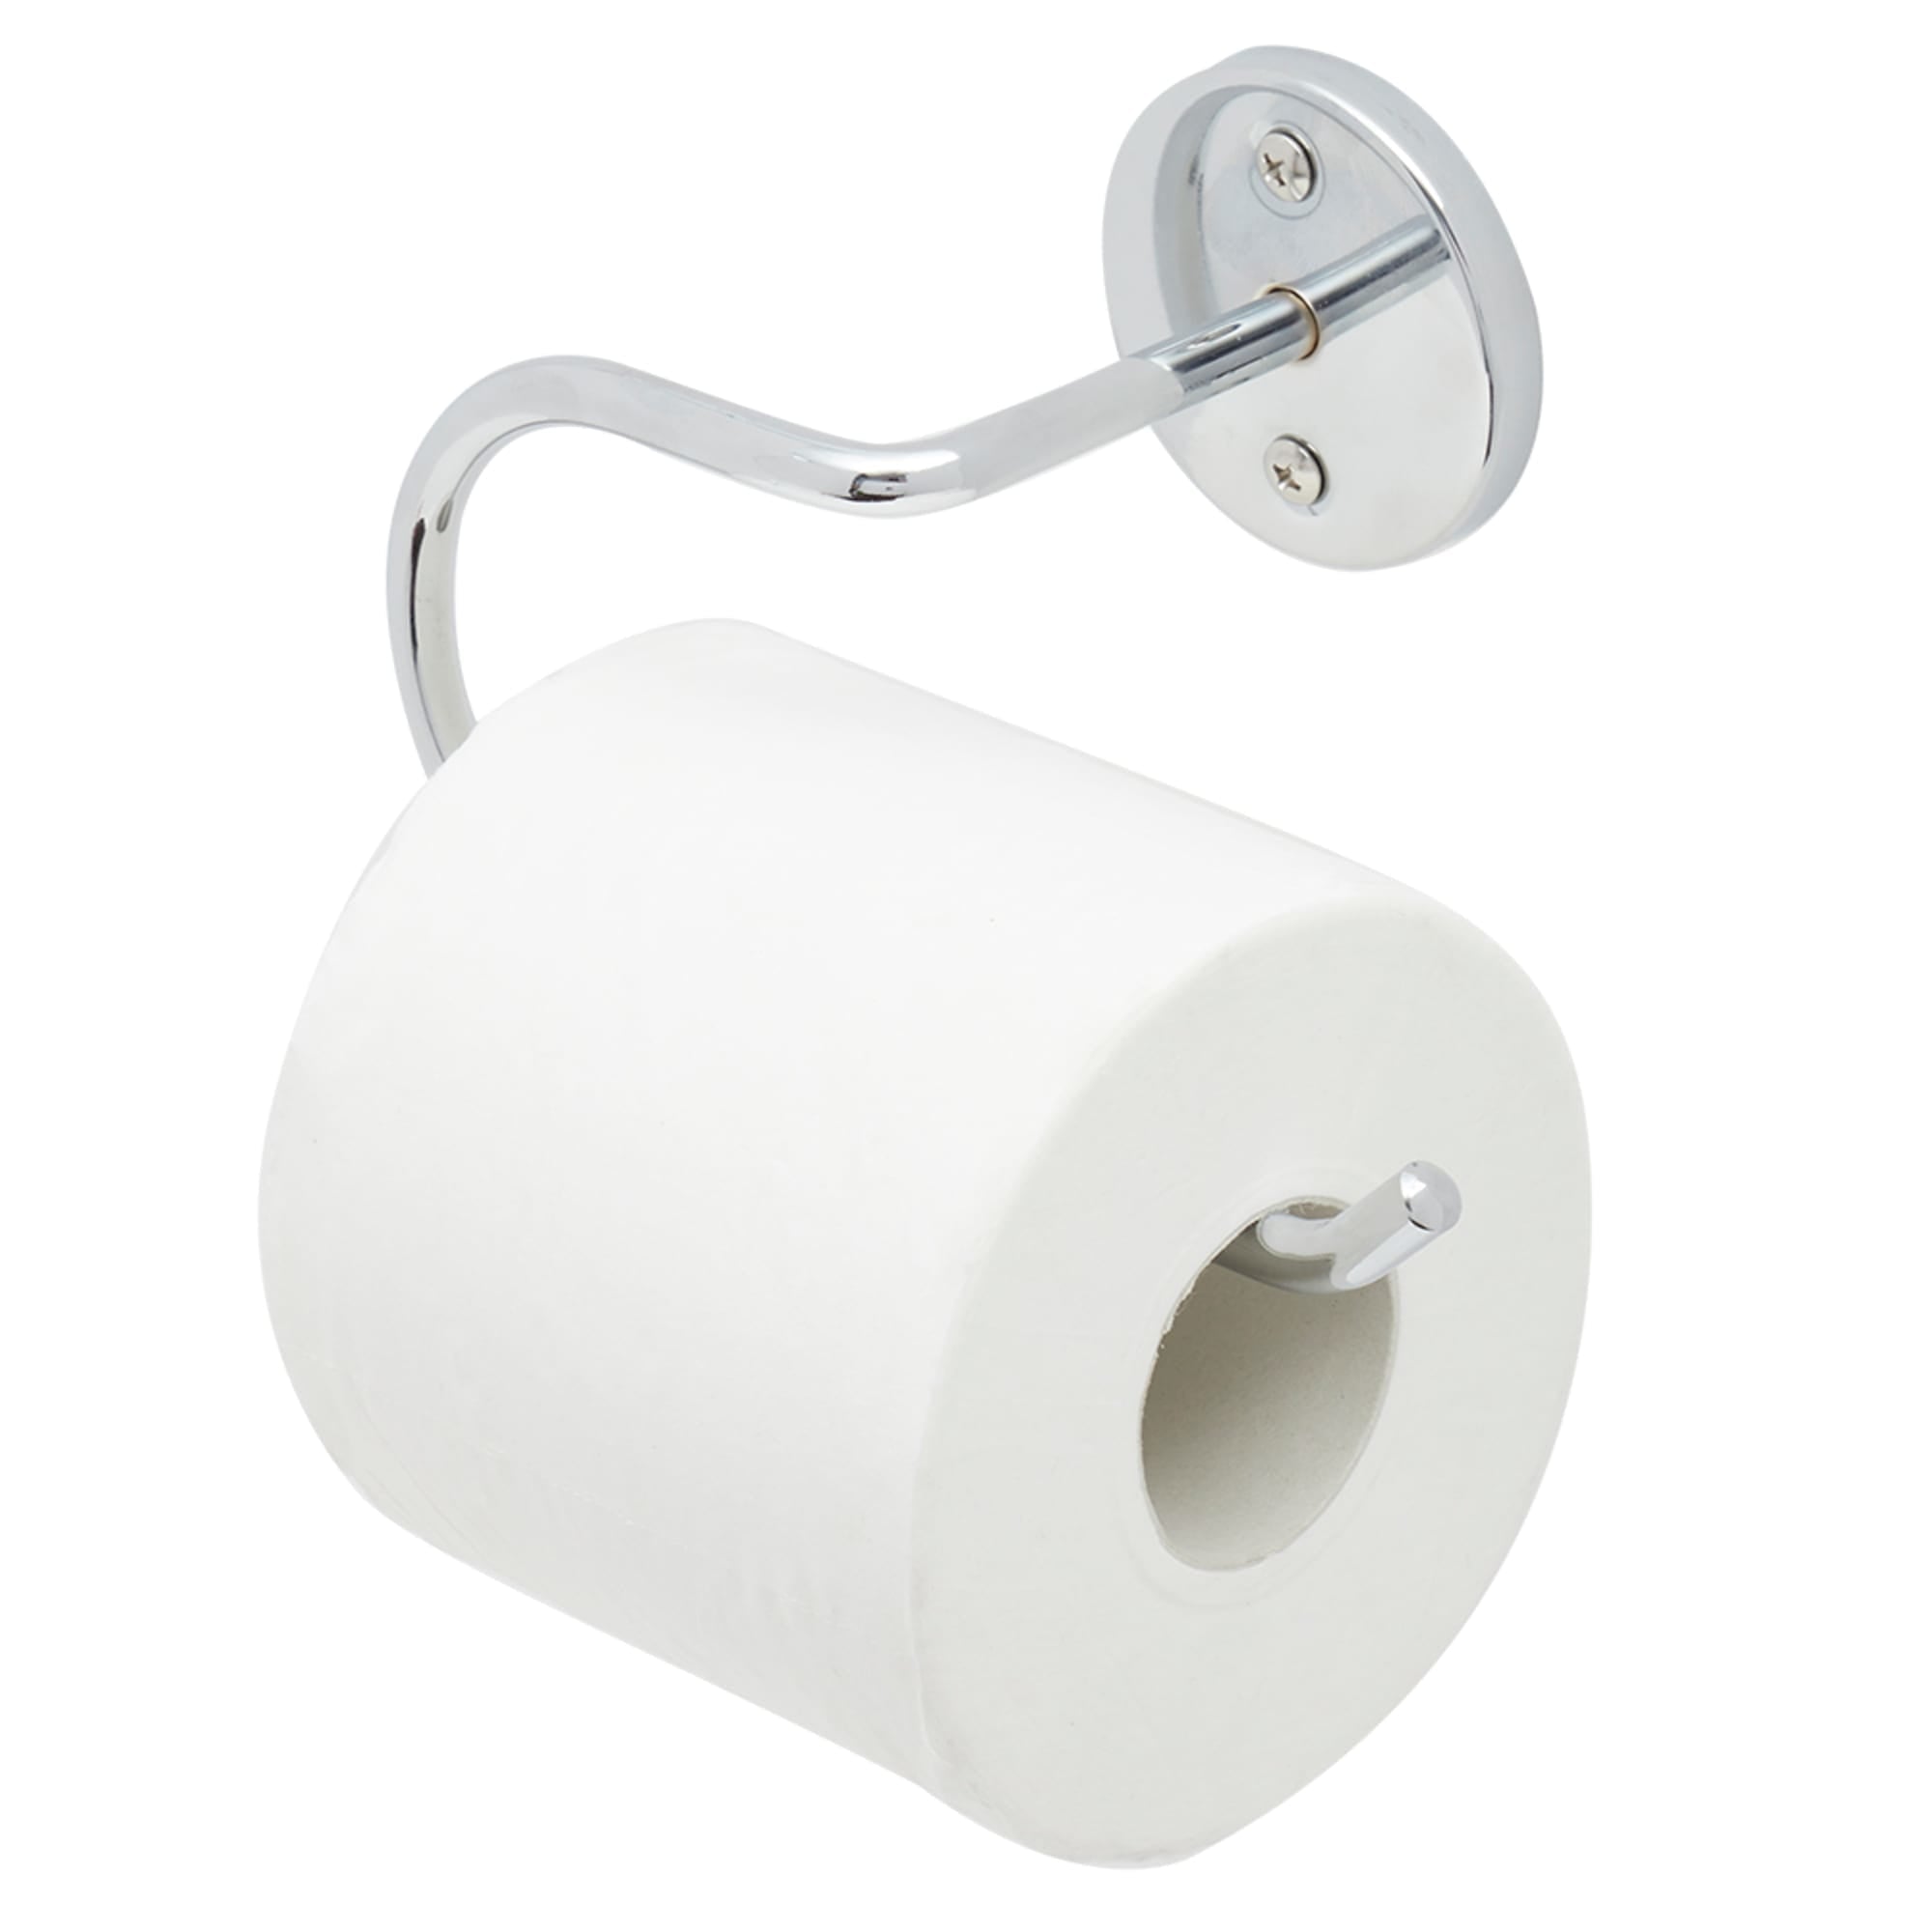 Wall-Mounted Toilet Paper Holder | BATH ORGANIZATION | SHOP HOME BASICS